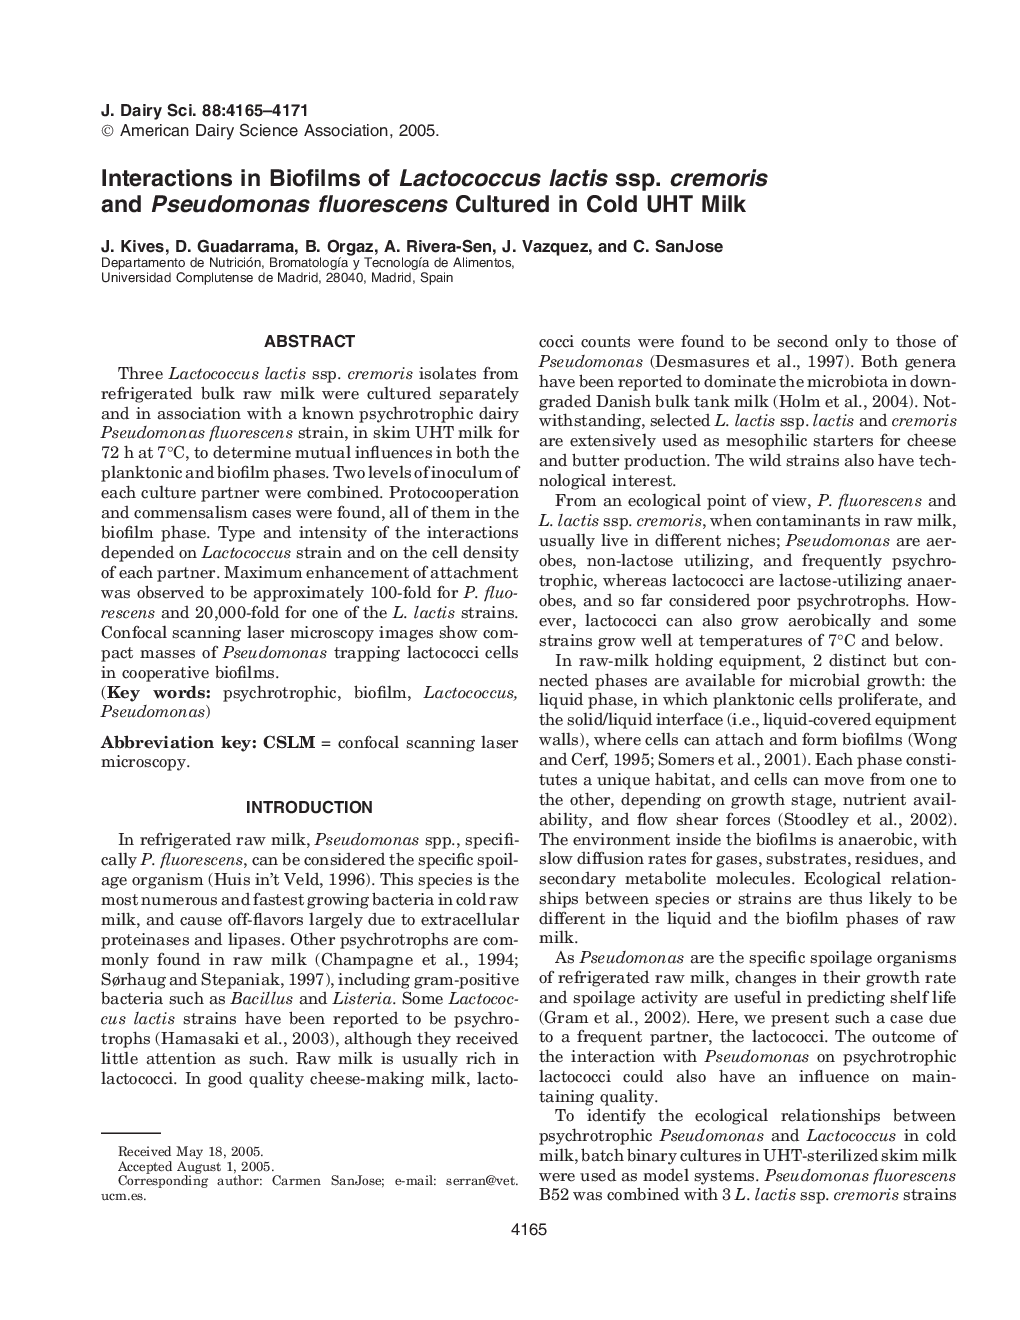 Interactions in Biofilms of Lactococcus lactis ssp. cremoris and Pseudomonas fluorescens Cultured in Cold UHT Milk